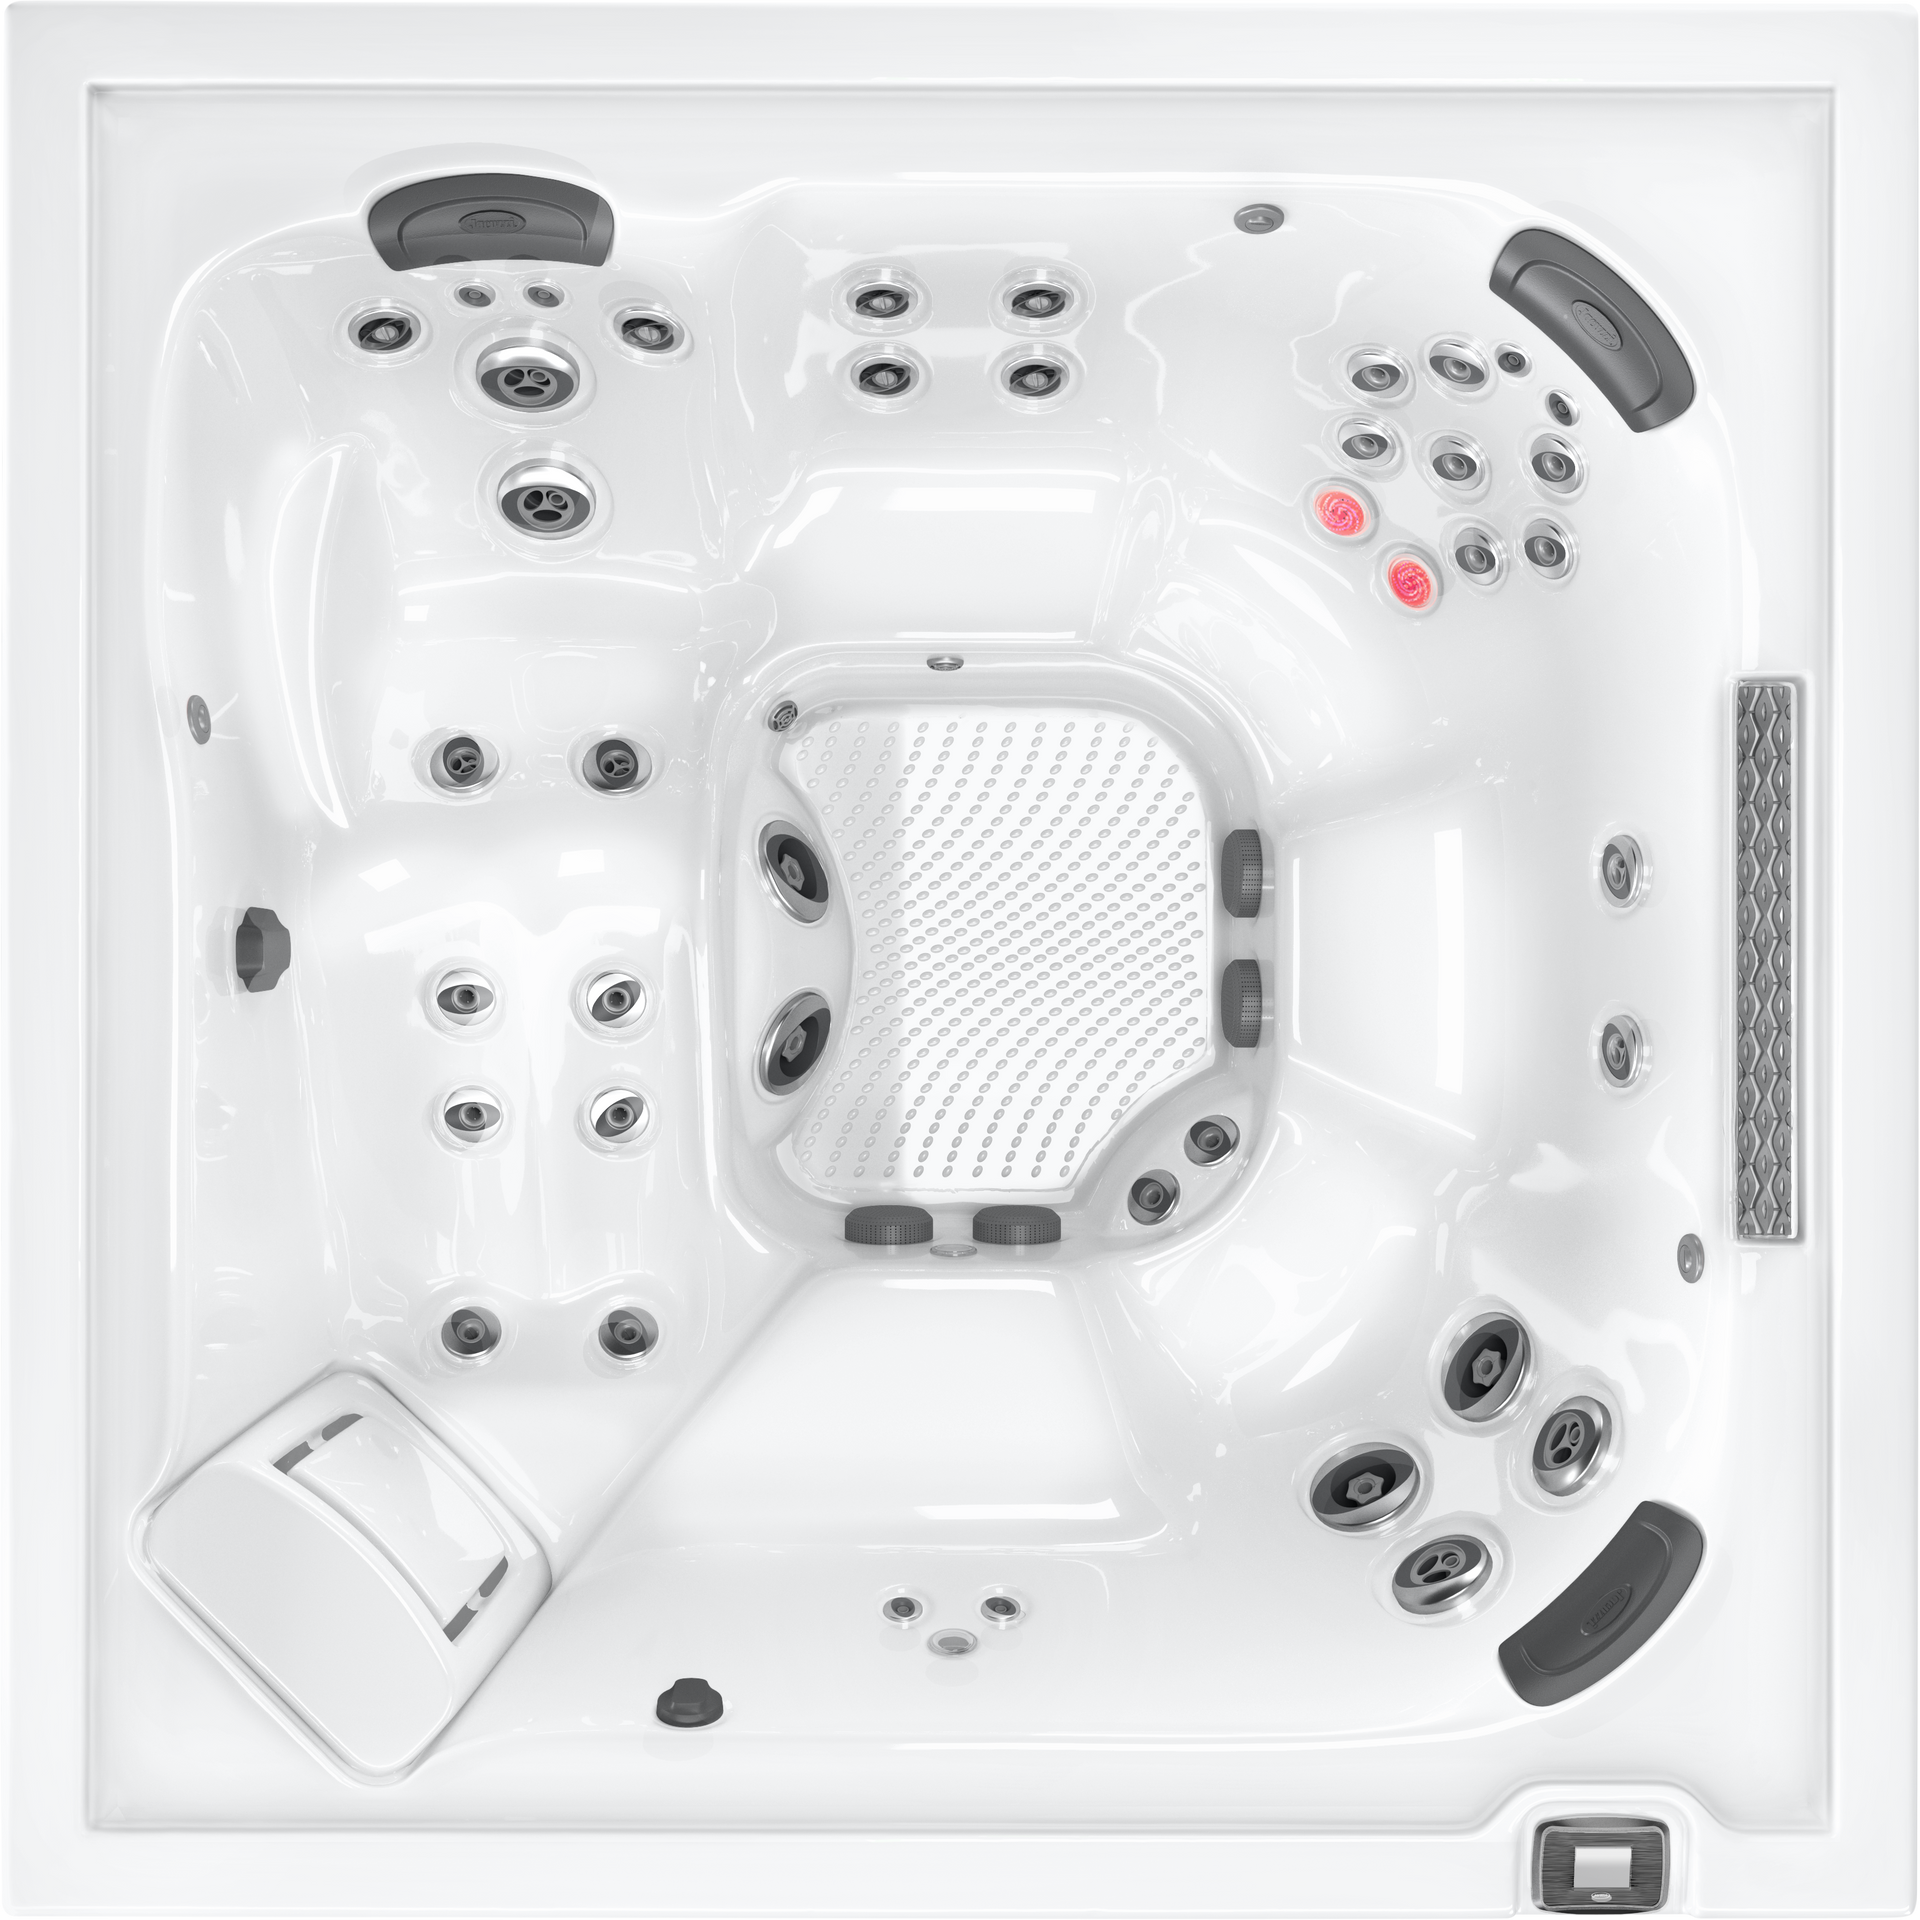 J-LXL® Designer Hot Tub with Open Seating & Designer Features